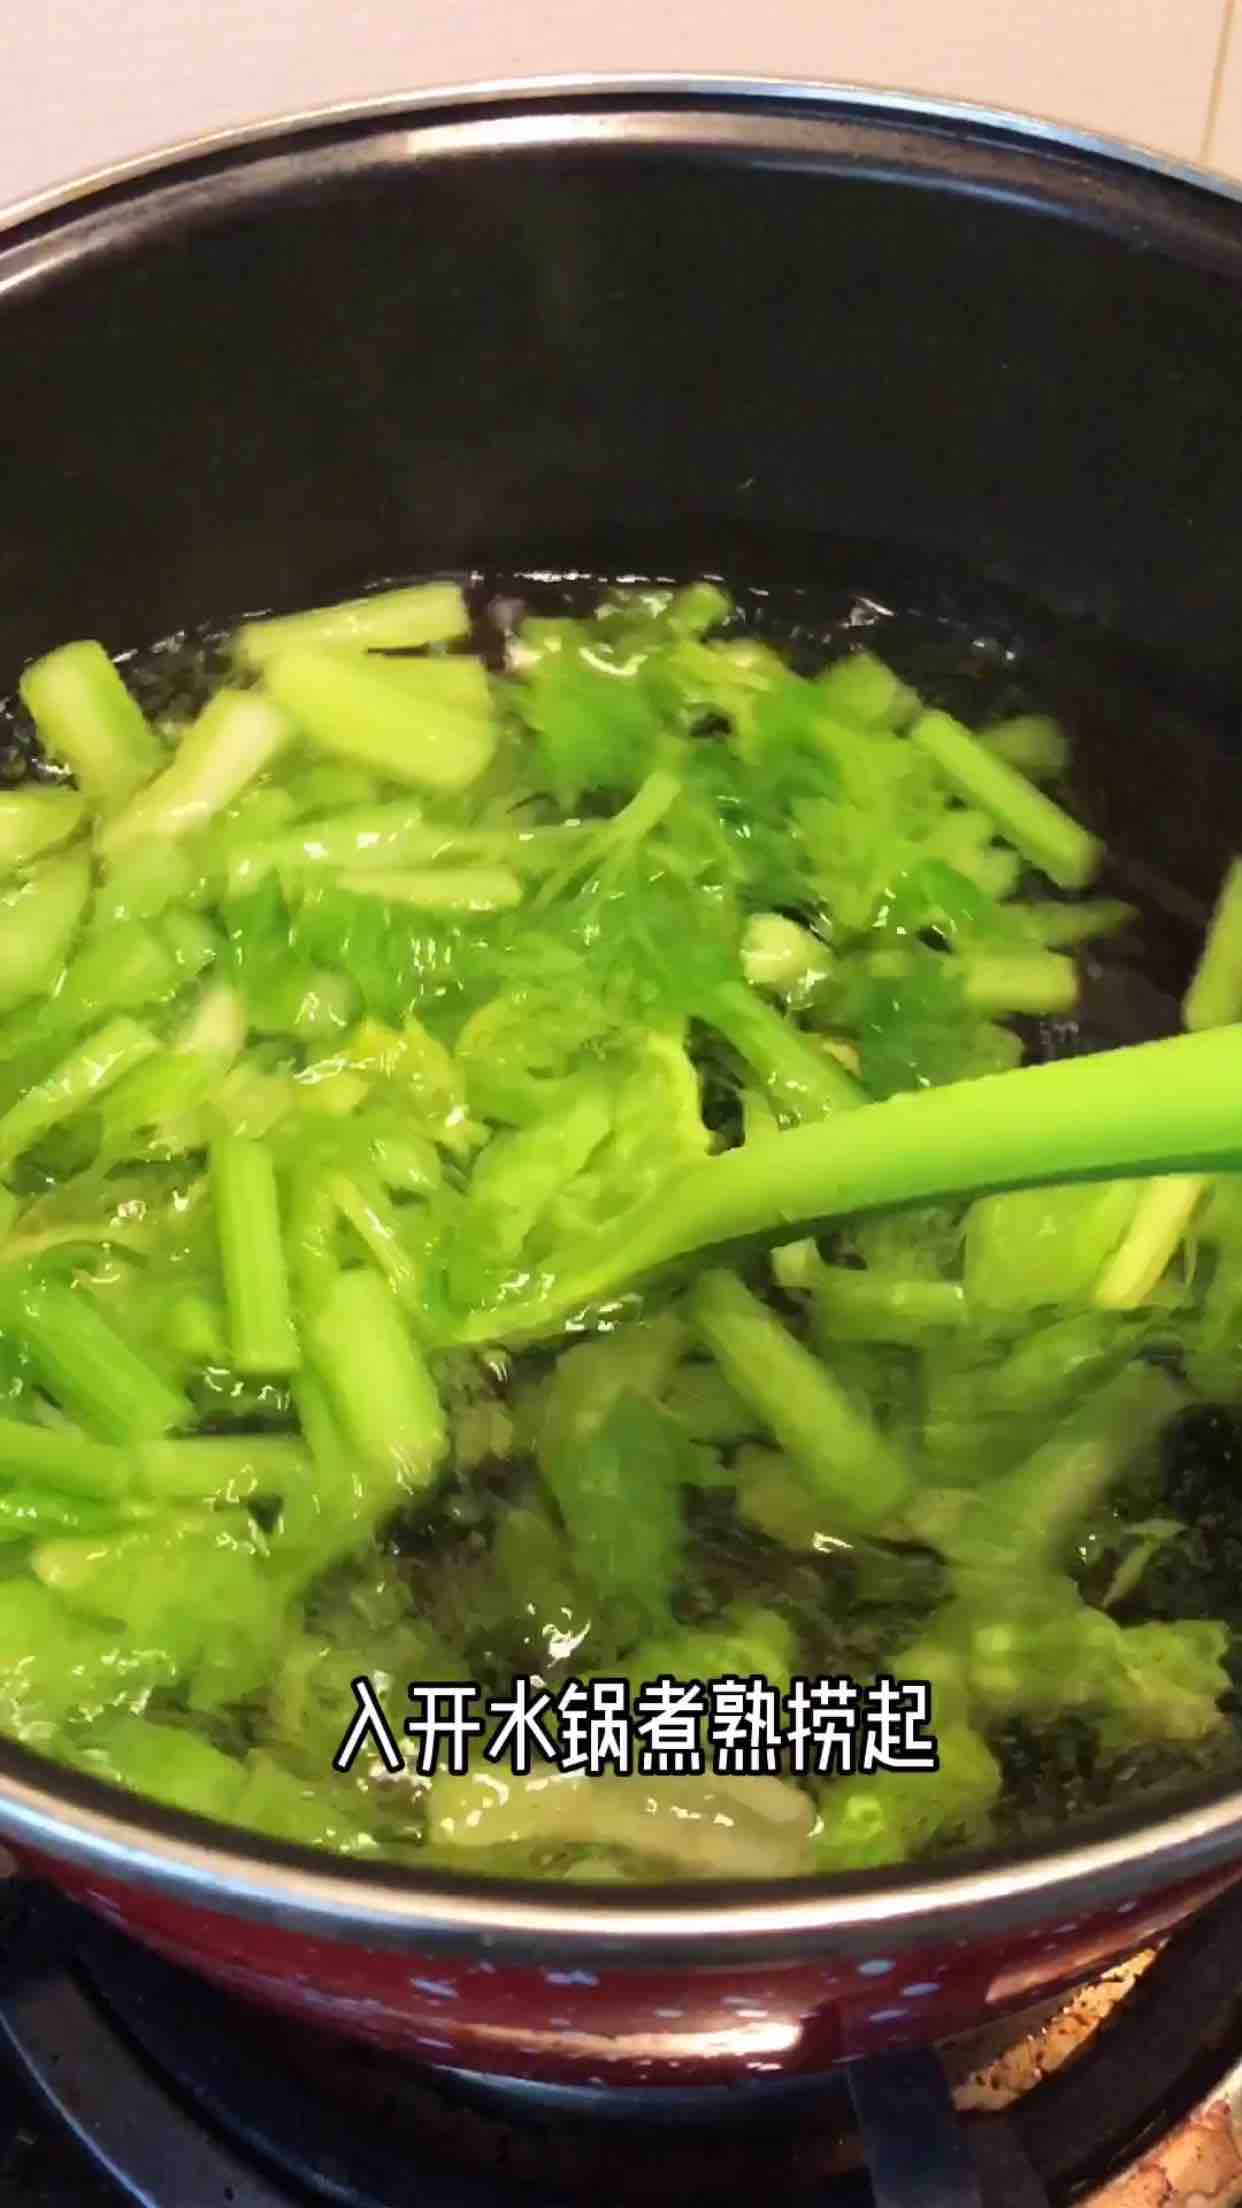 Celery Mixed with Black Fungus recipe